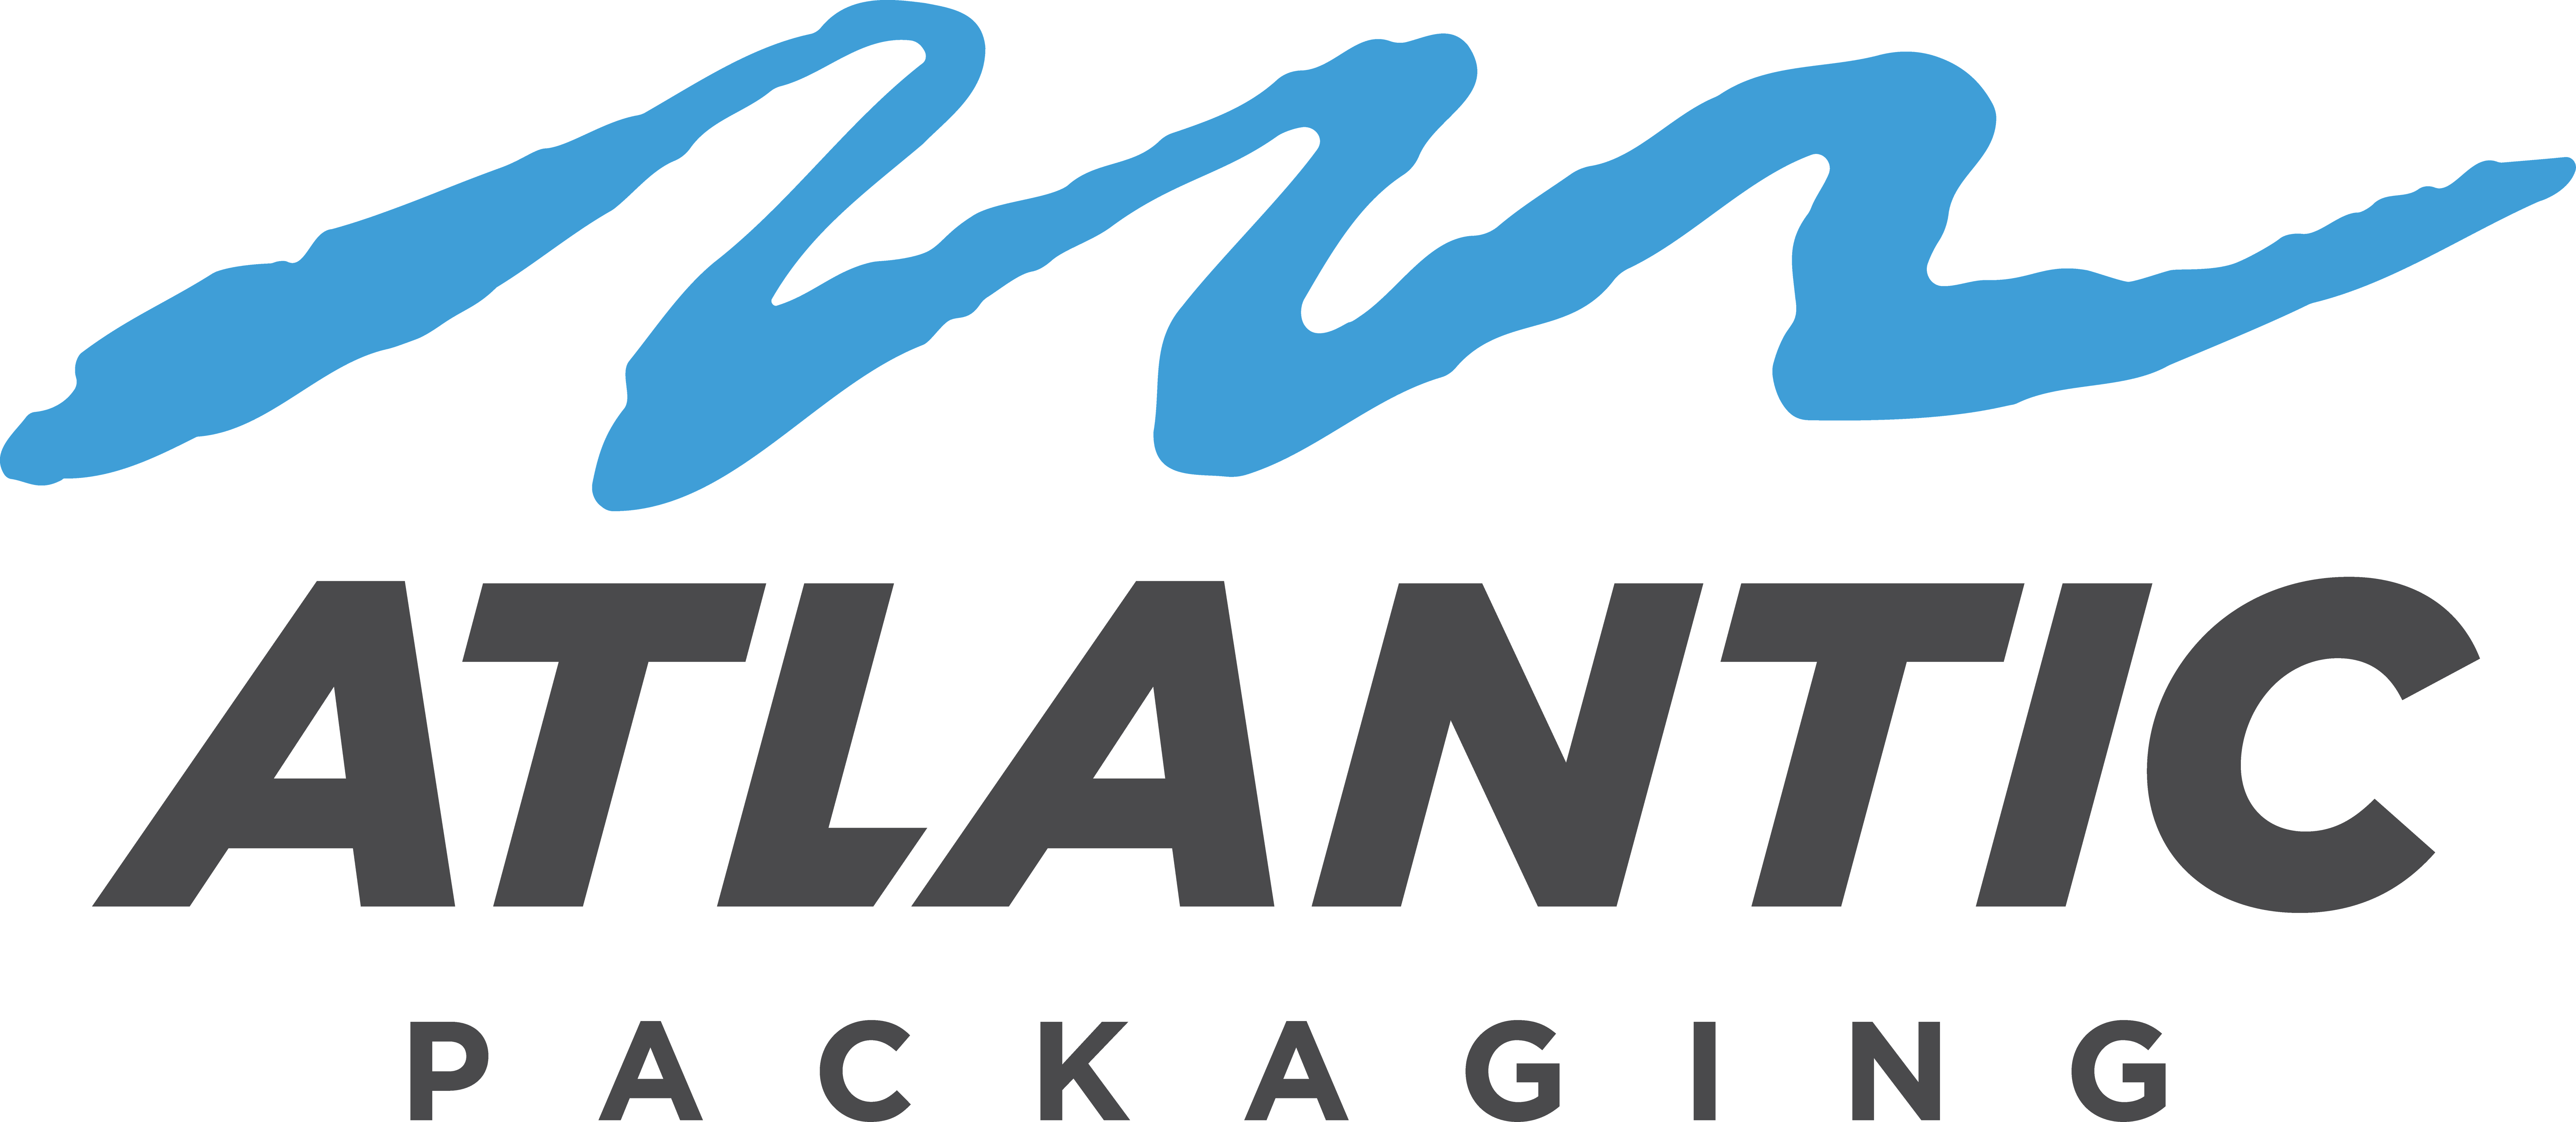 Atlantic Packaging